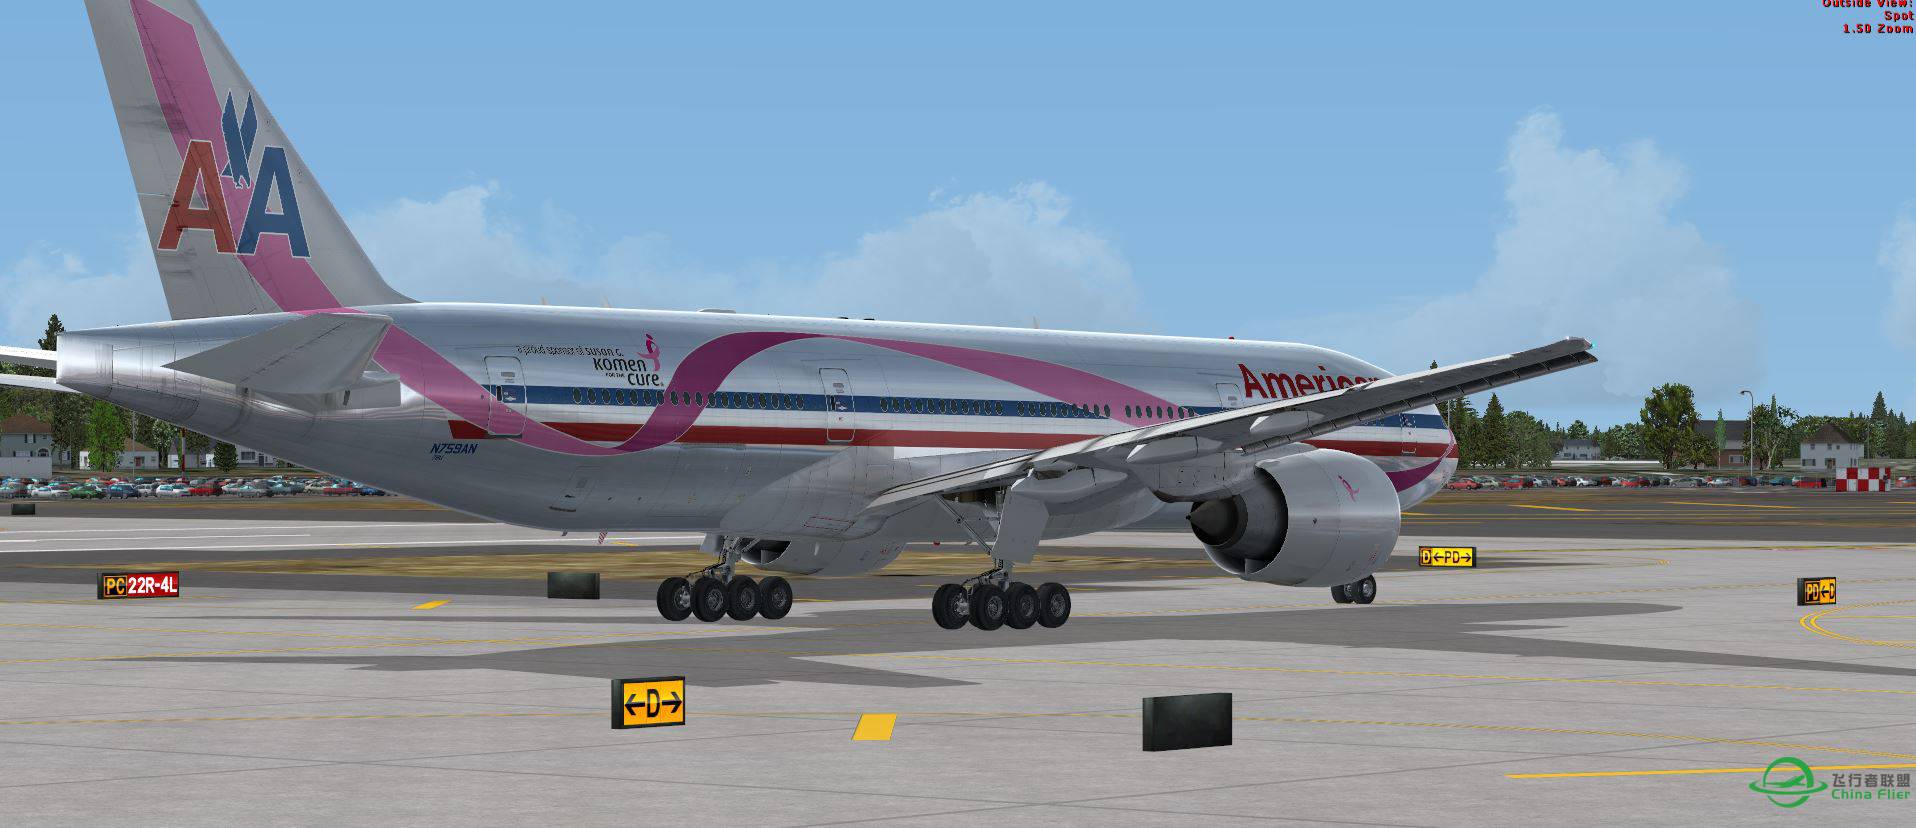 B777 American Airline-8589 